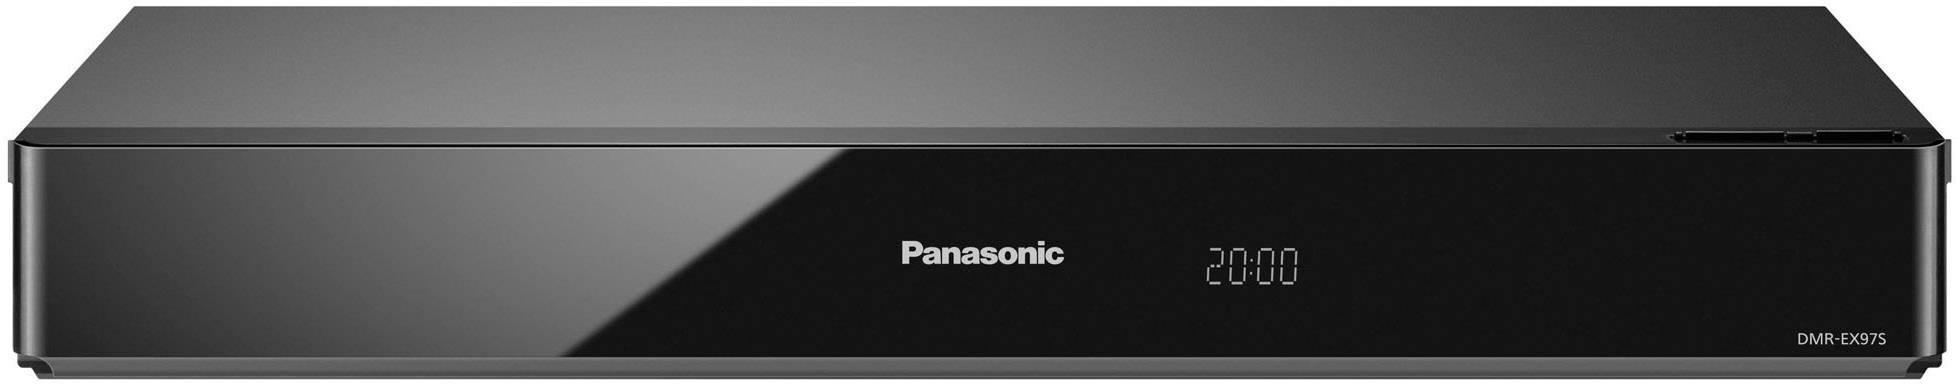 virksomhed trappe ordlyd Panasonic DMR-EX97SEGK DVD recorder DVB-S HD tuner Black | Conrad.com